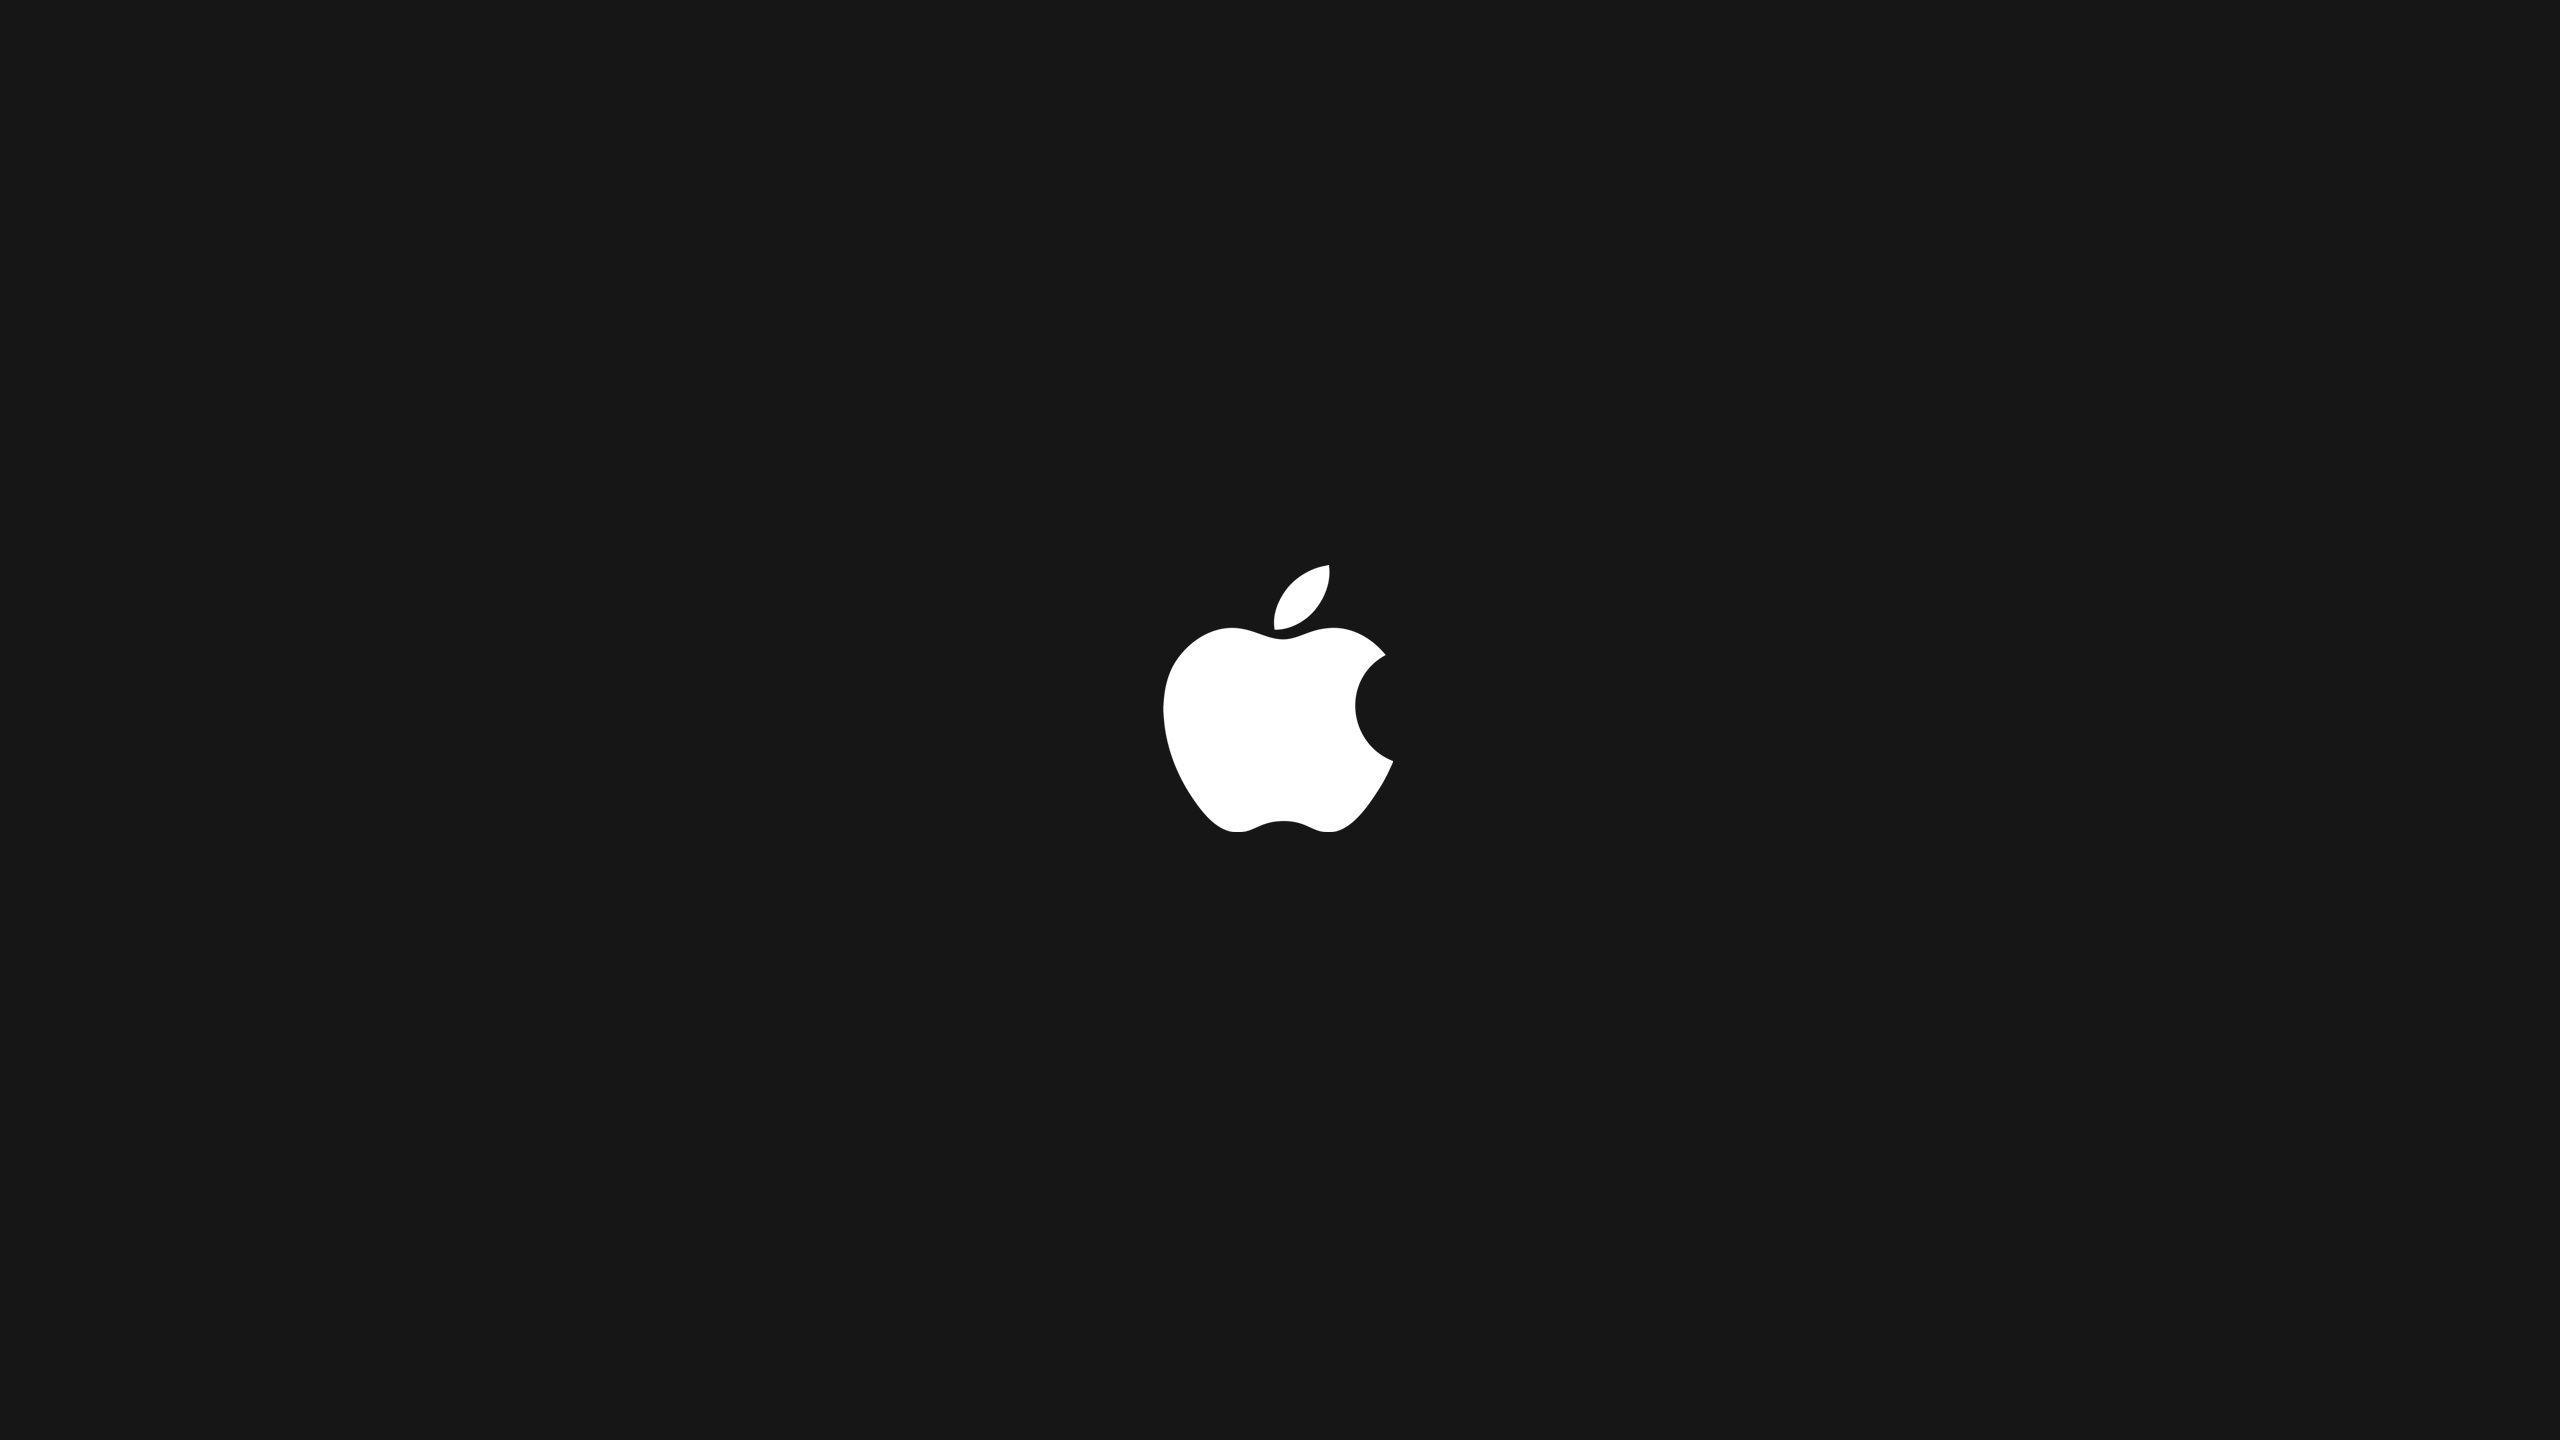 White On Black Background Apple Logo - mac apple logo minimalism black background green HD wallpaper. ipad